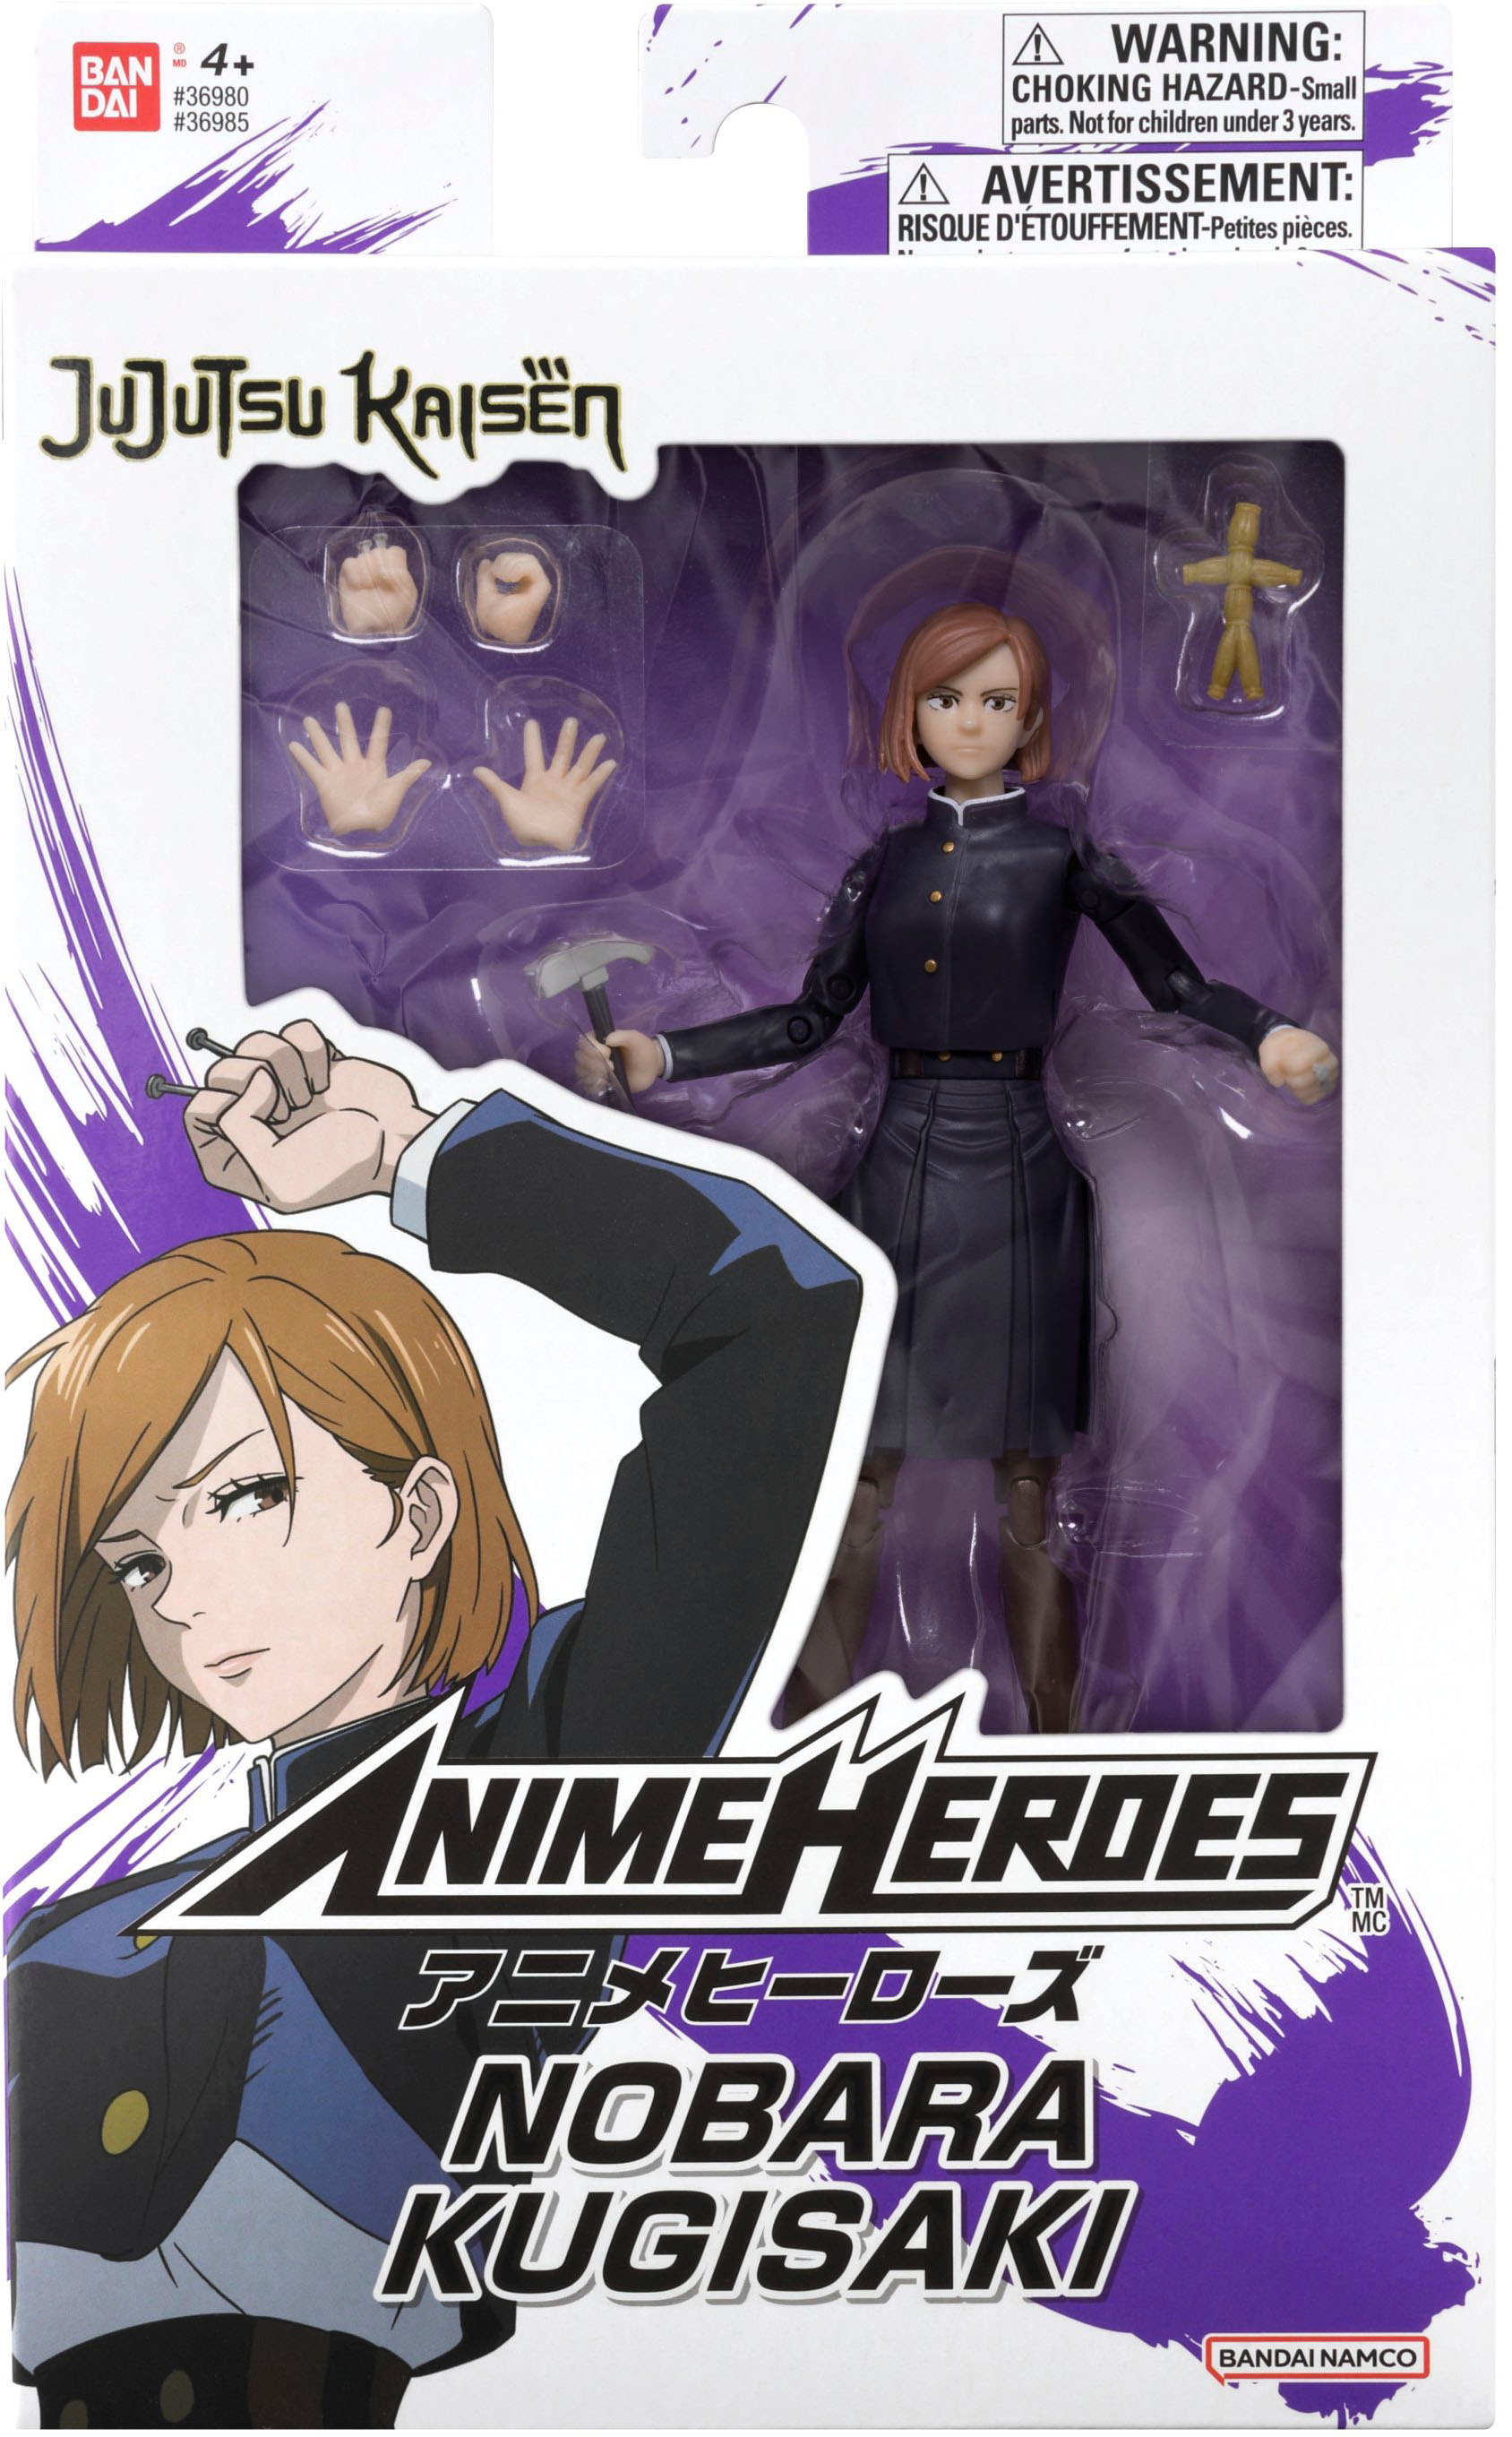 Bandai Anime Heroes 6.5 Jujutsu Kaisen Action Figure Assortment Styles May  Vary 36980 - Best Buy